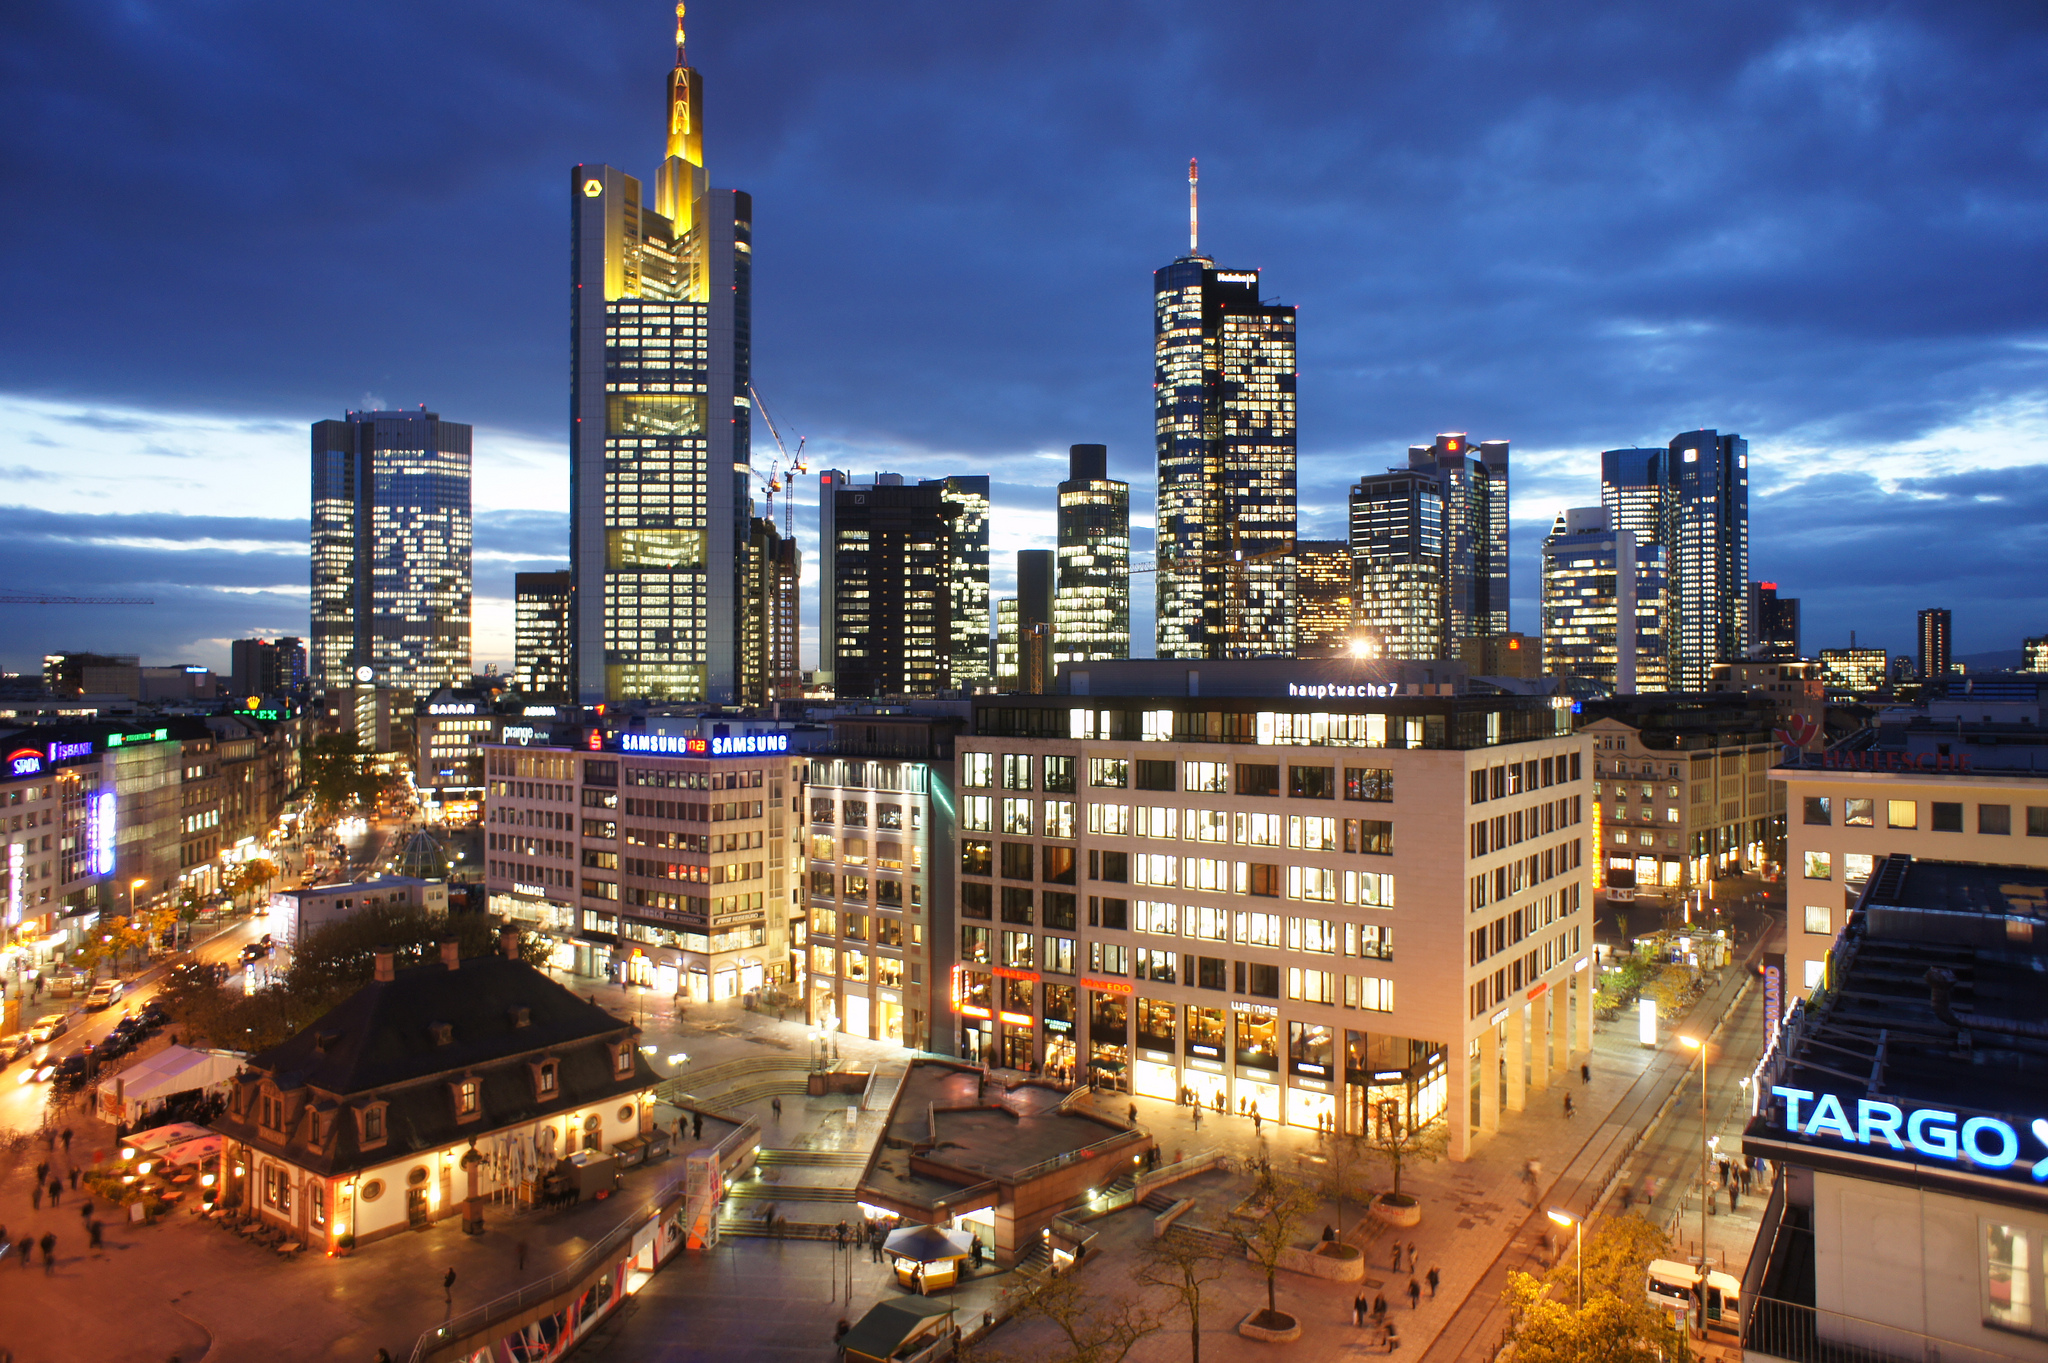 The Frankfurt skyline by night